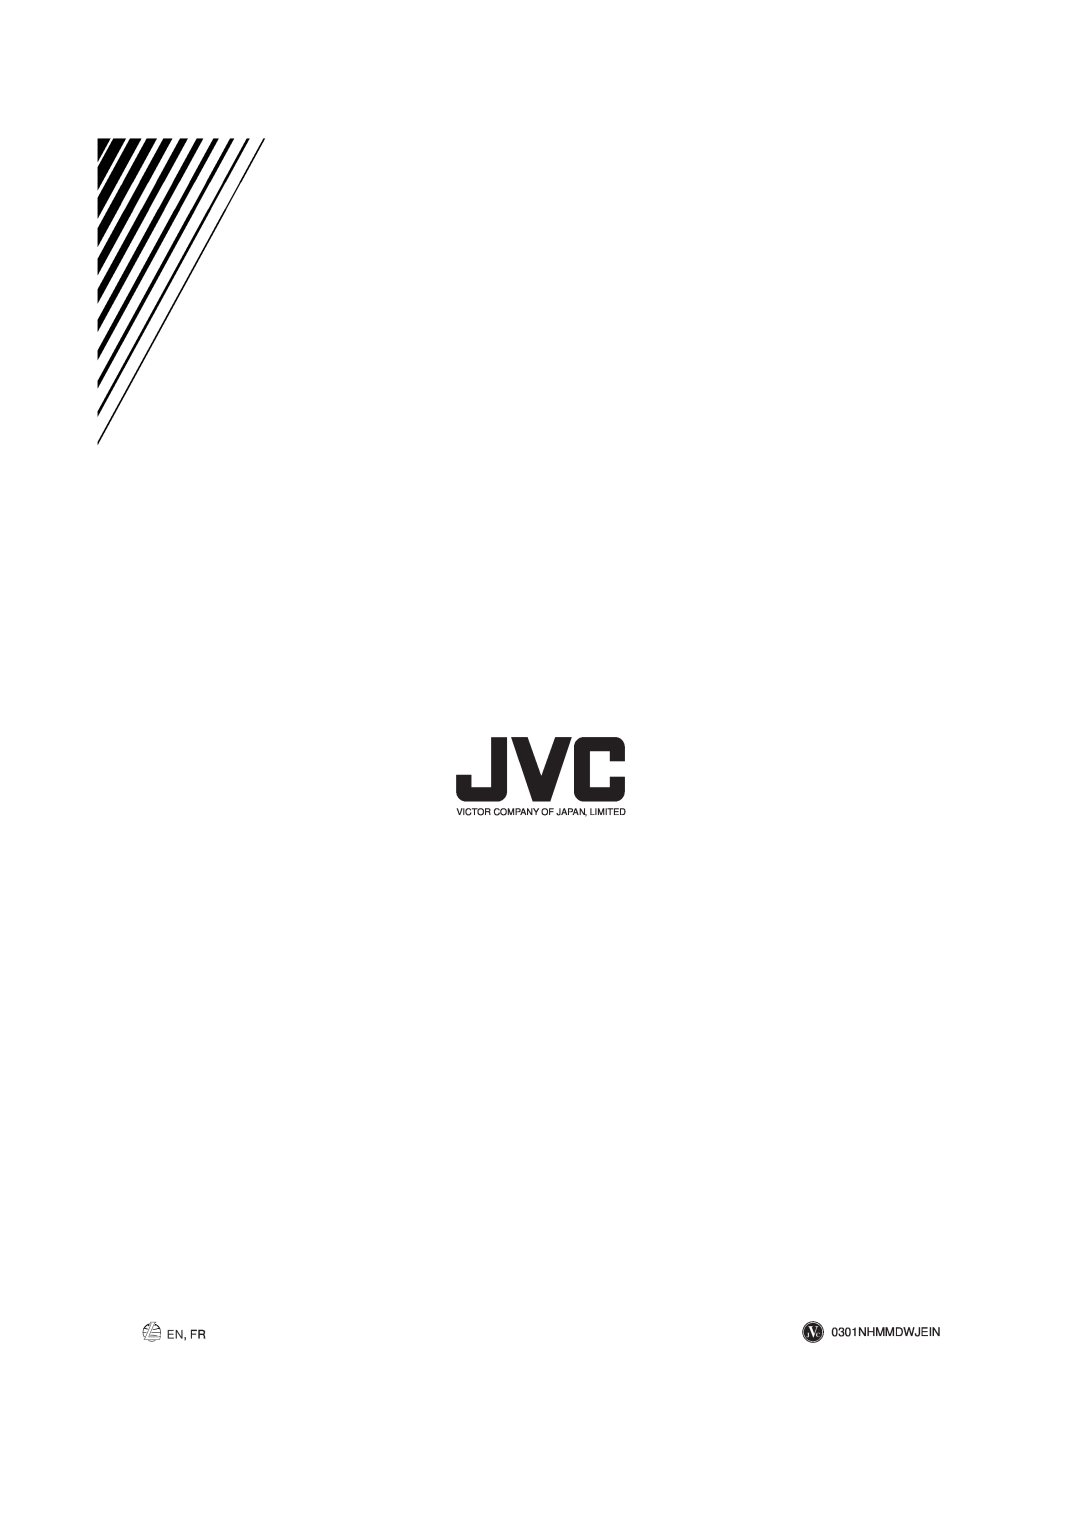 JVC RX-6010VBK manual En, Fr, J C 0301NHMMDWJEIN, Victor Company Of Japan, Limited 